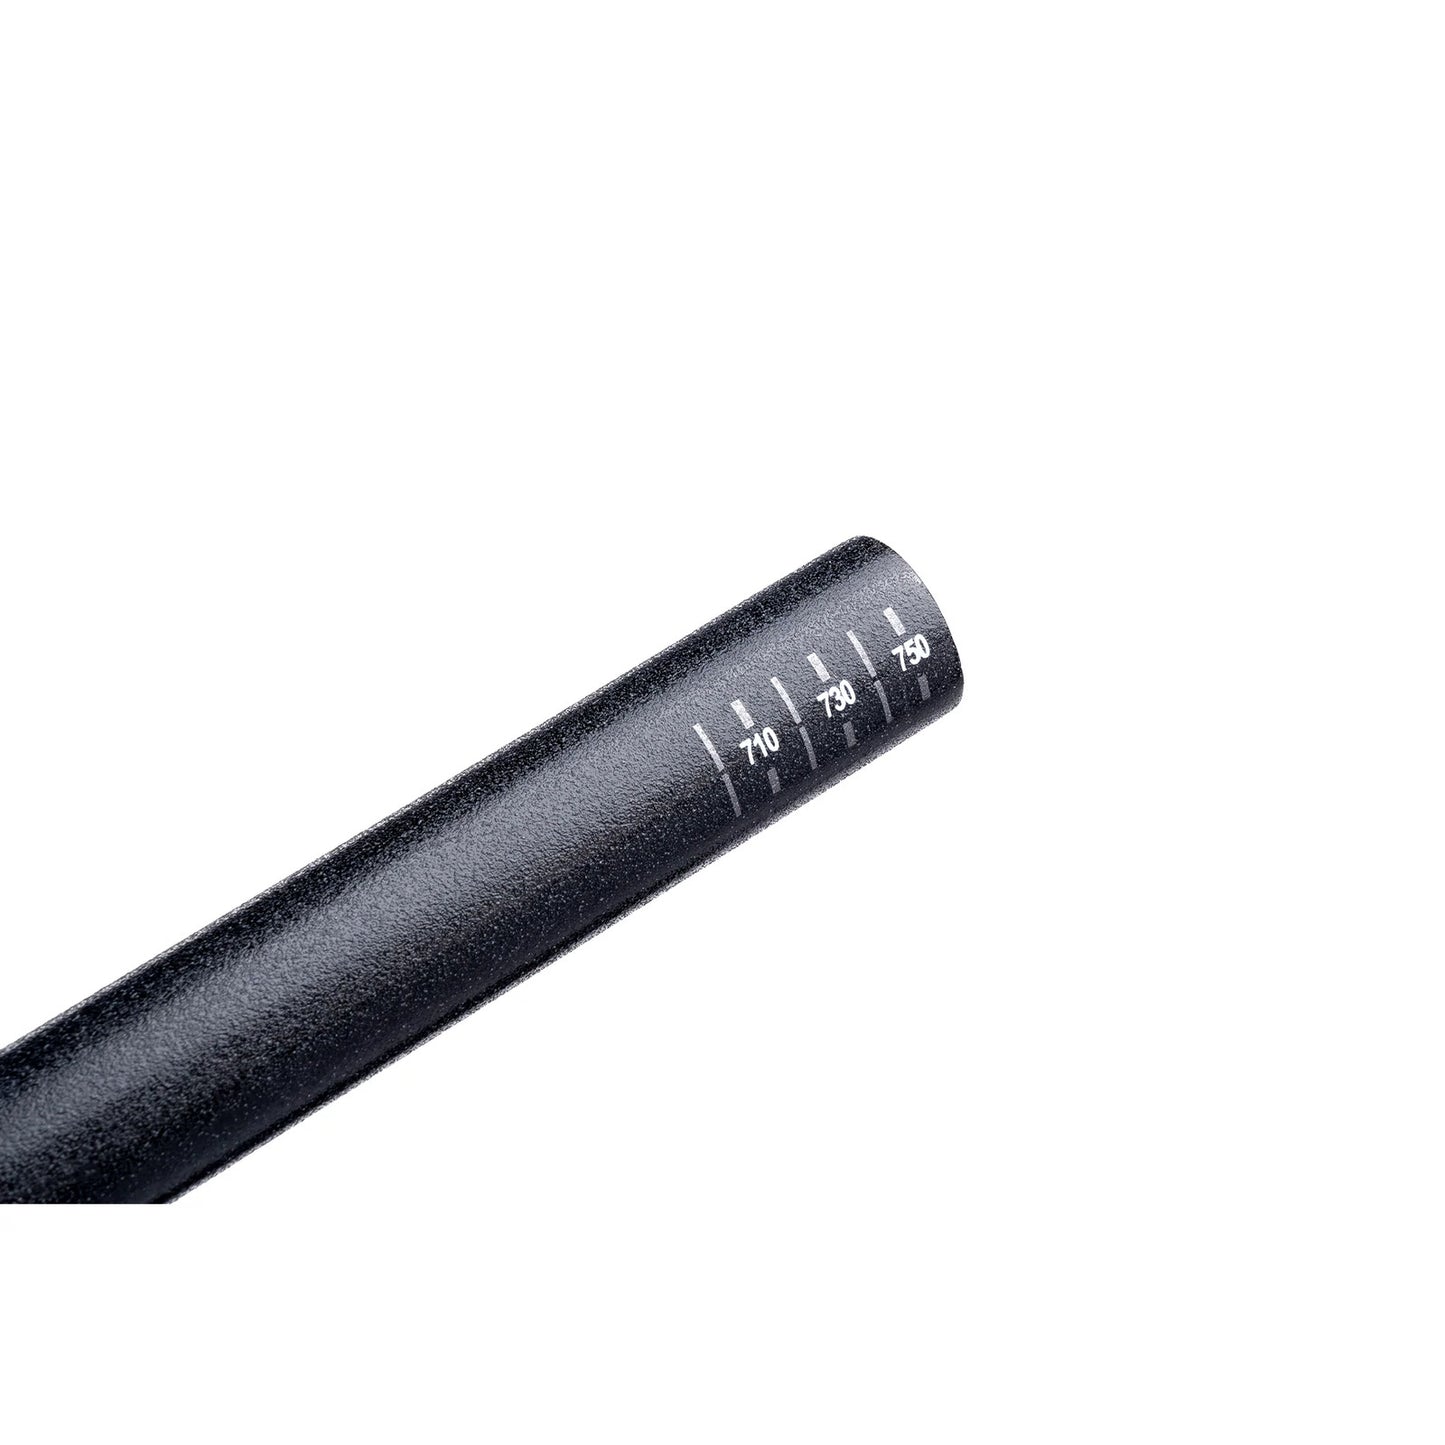 Protaper Hyperlite Carbon flatbar - 31.8mm